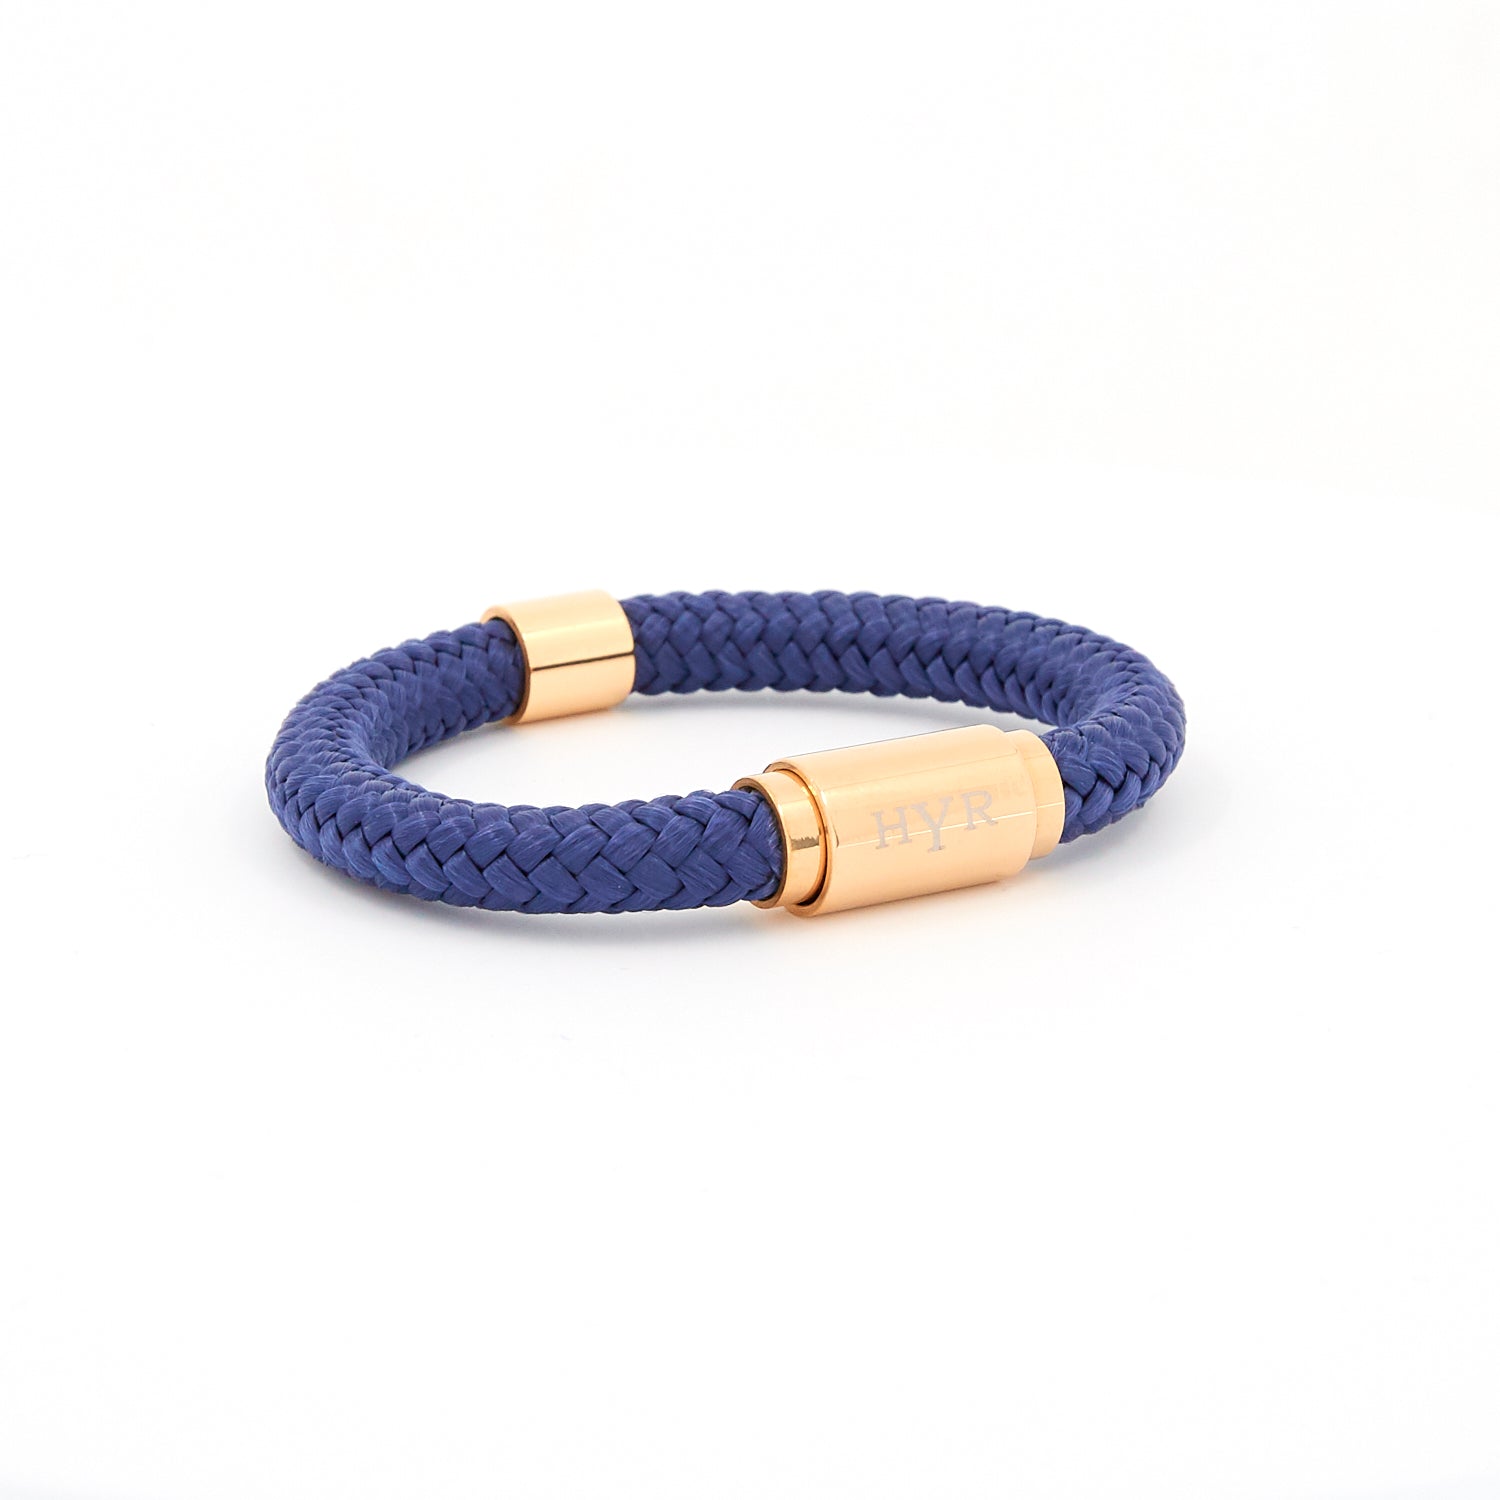 First class navy rope bracelet - rose gold